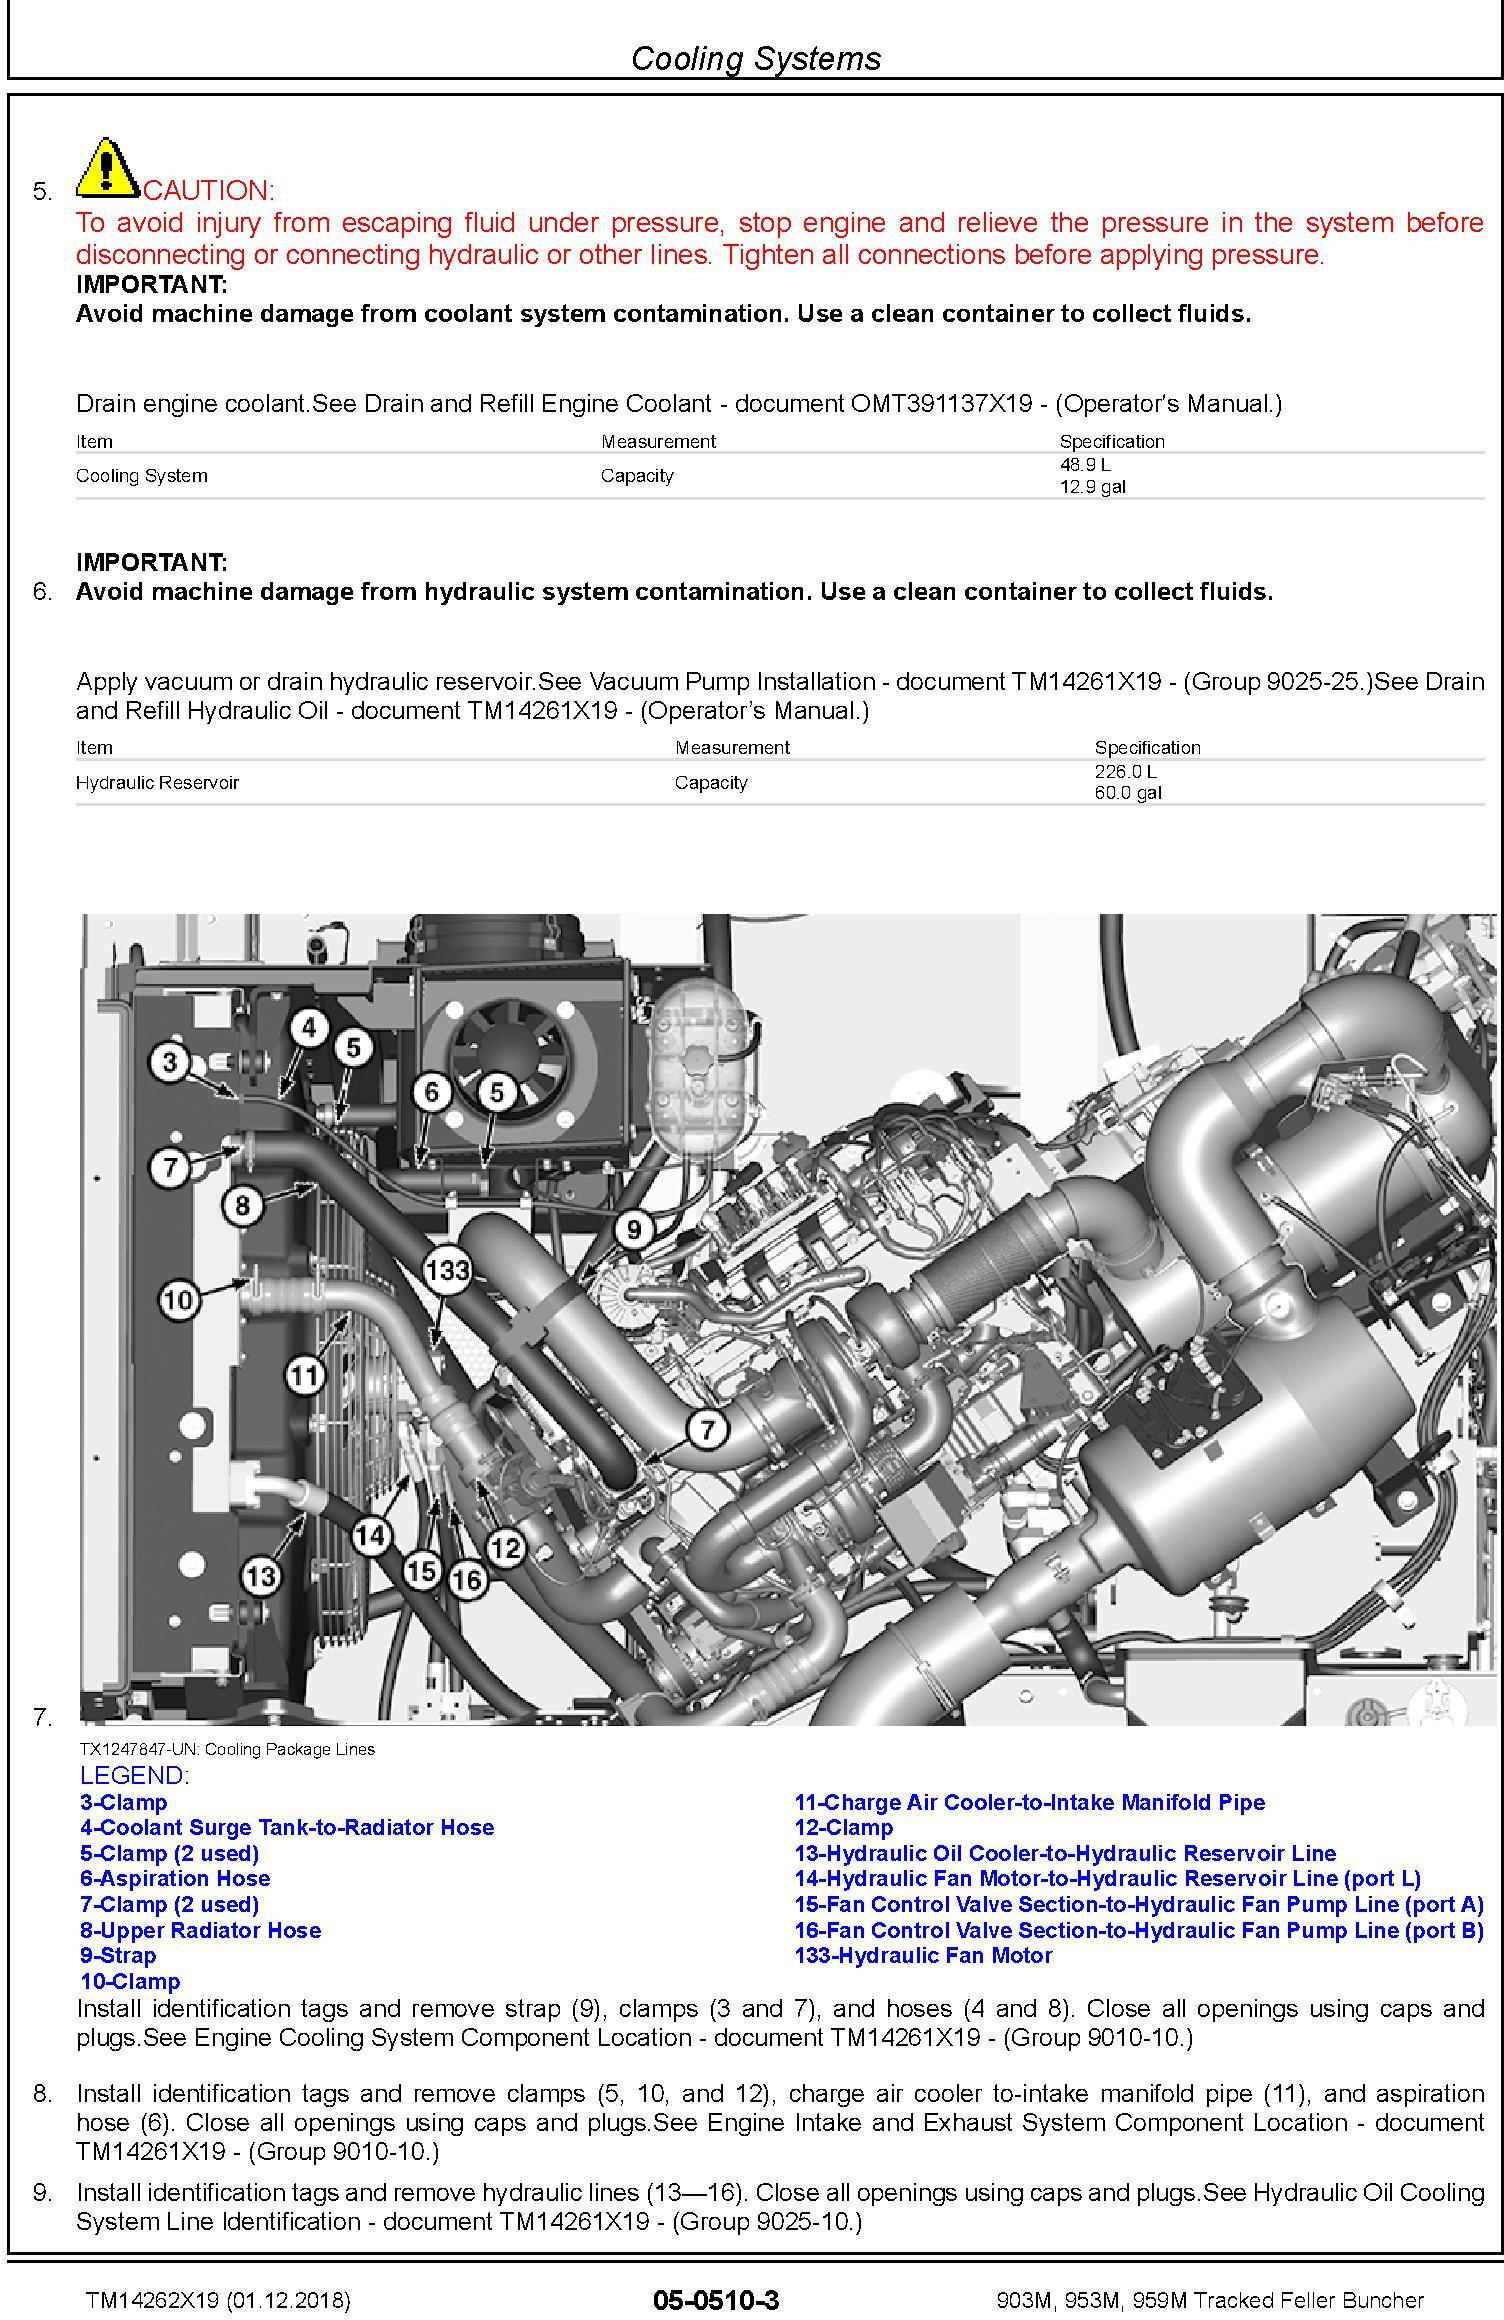 John Deere 903M, 953M, 959M (SN.F317982-,L317982-) Tracked Feller Buncher Repair Manual (TM14262X19) - 3